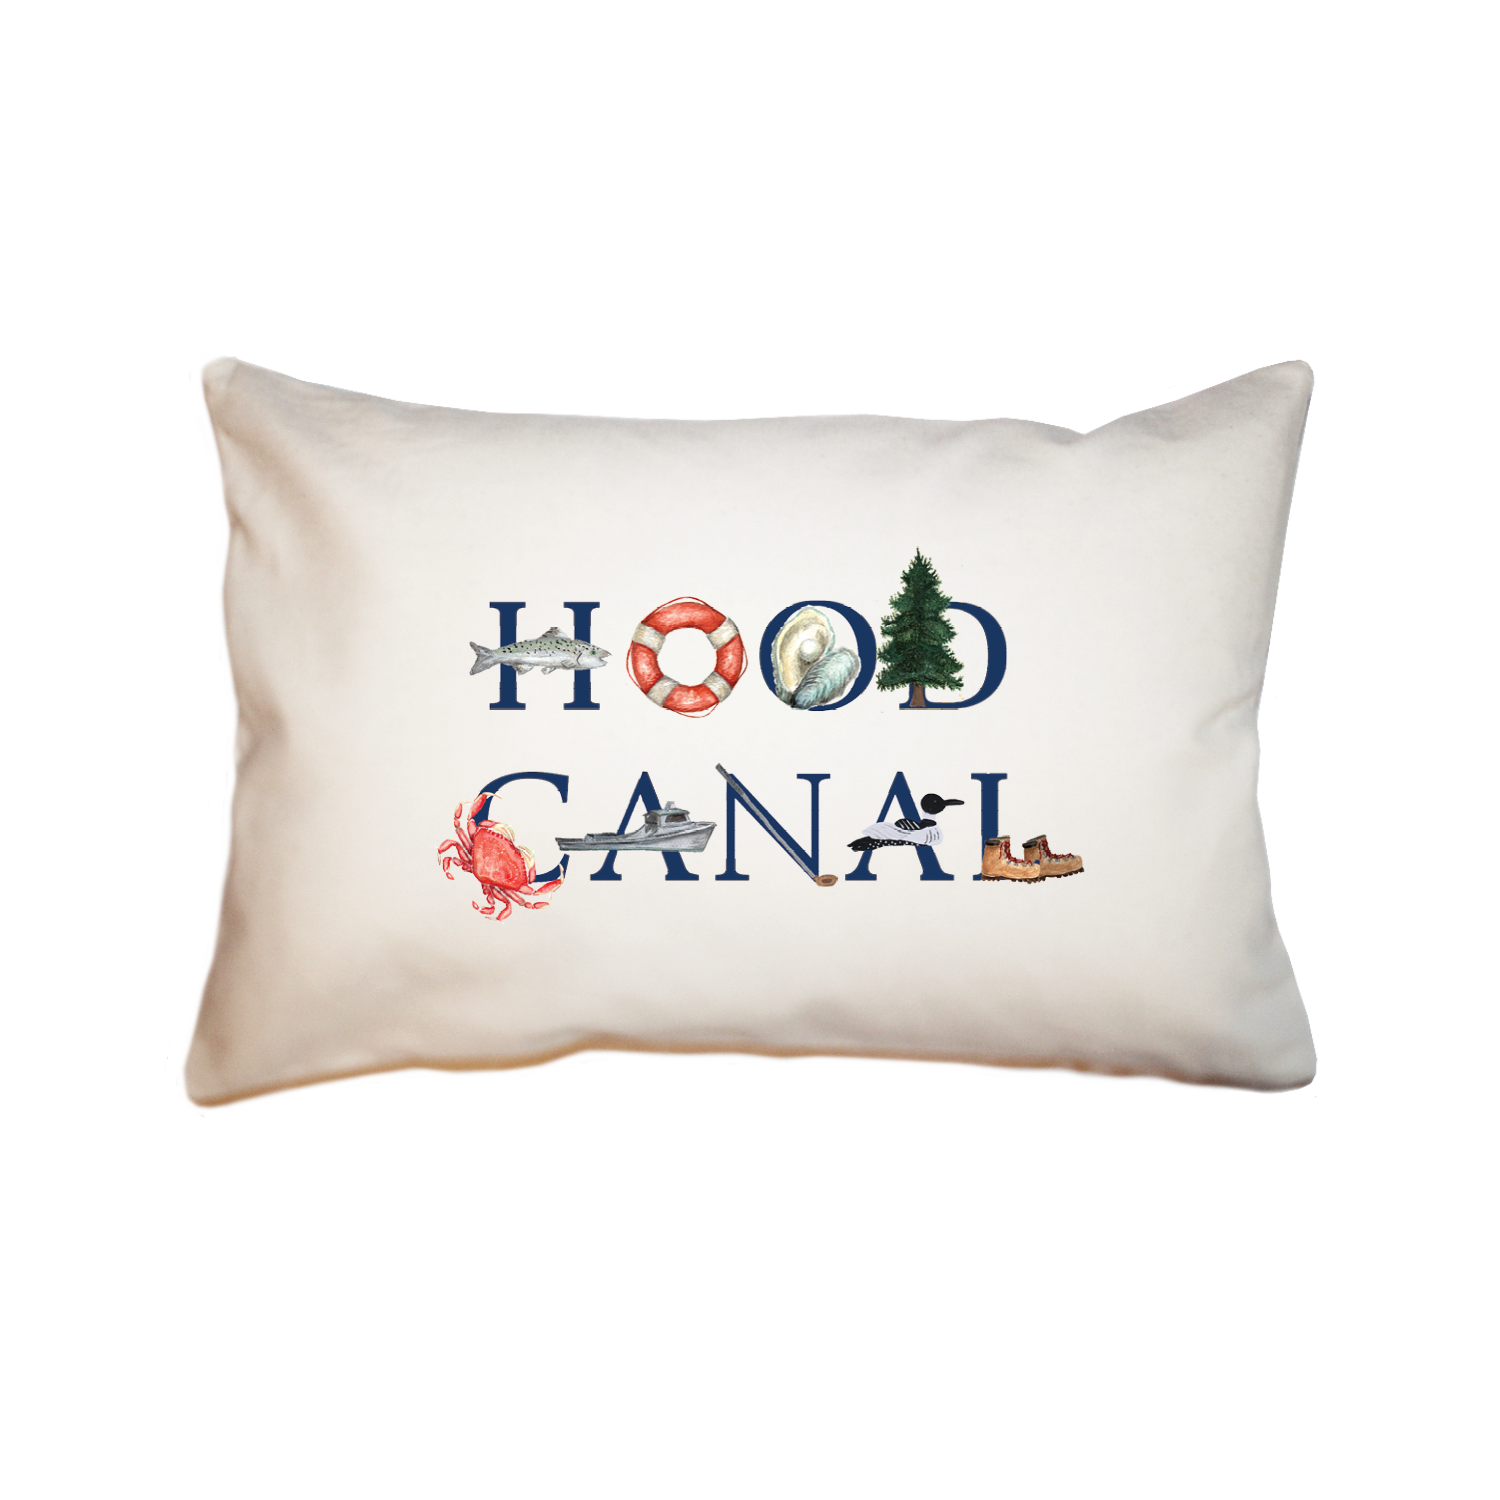 hood canal large rectangle pillow